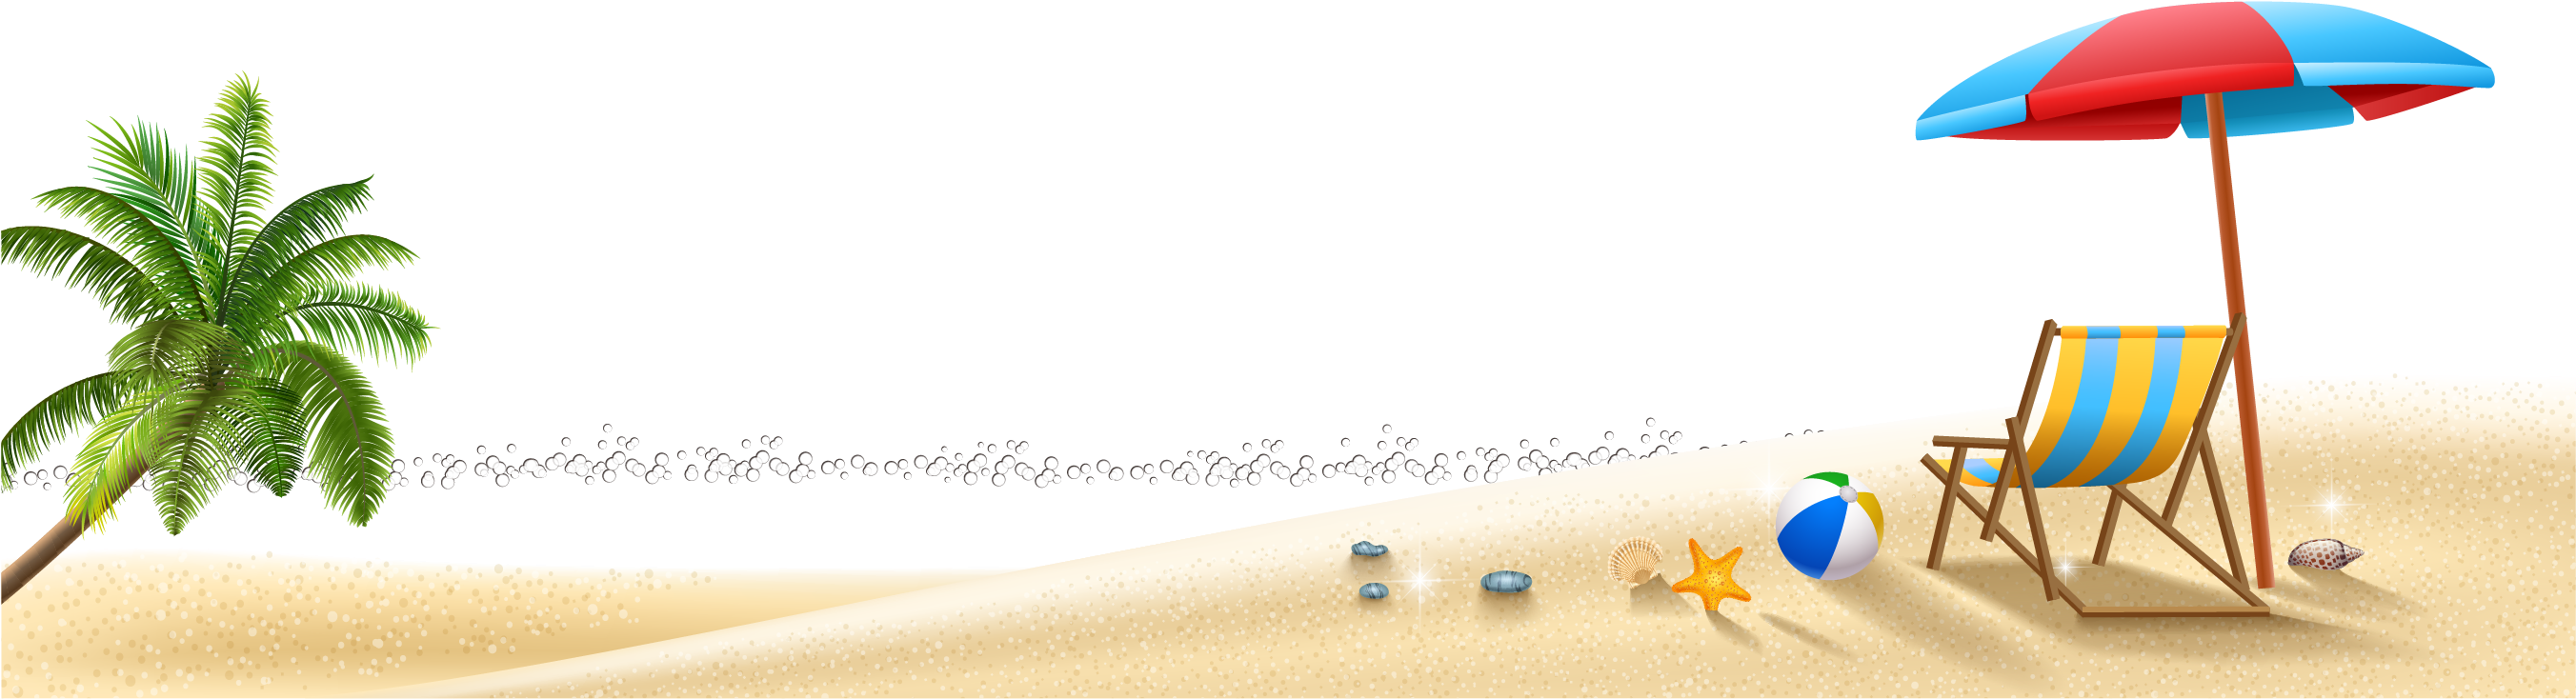 Beach Sand Gratis - Beach Sand Gratis (3001x824)